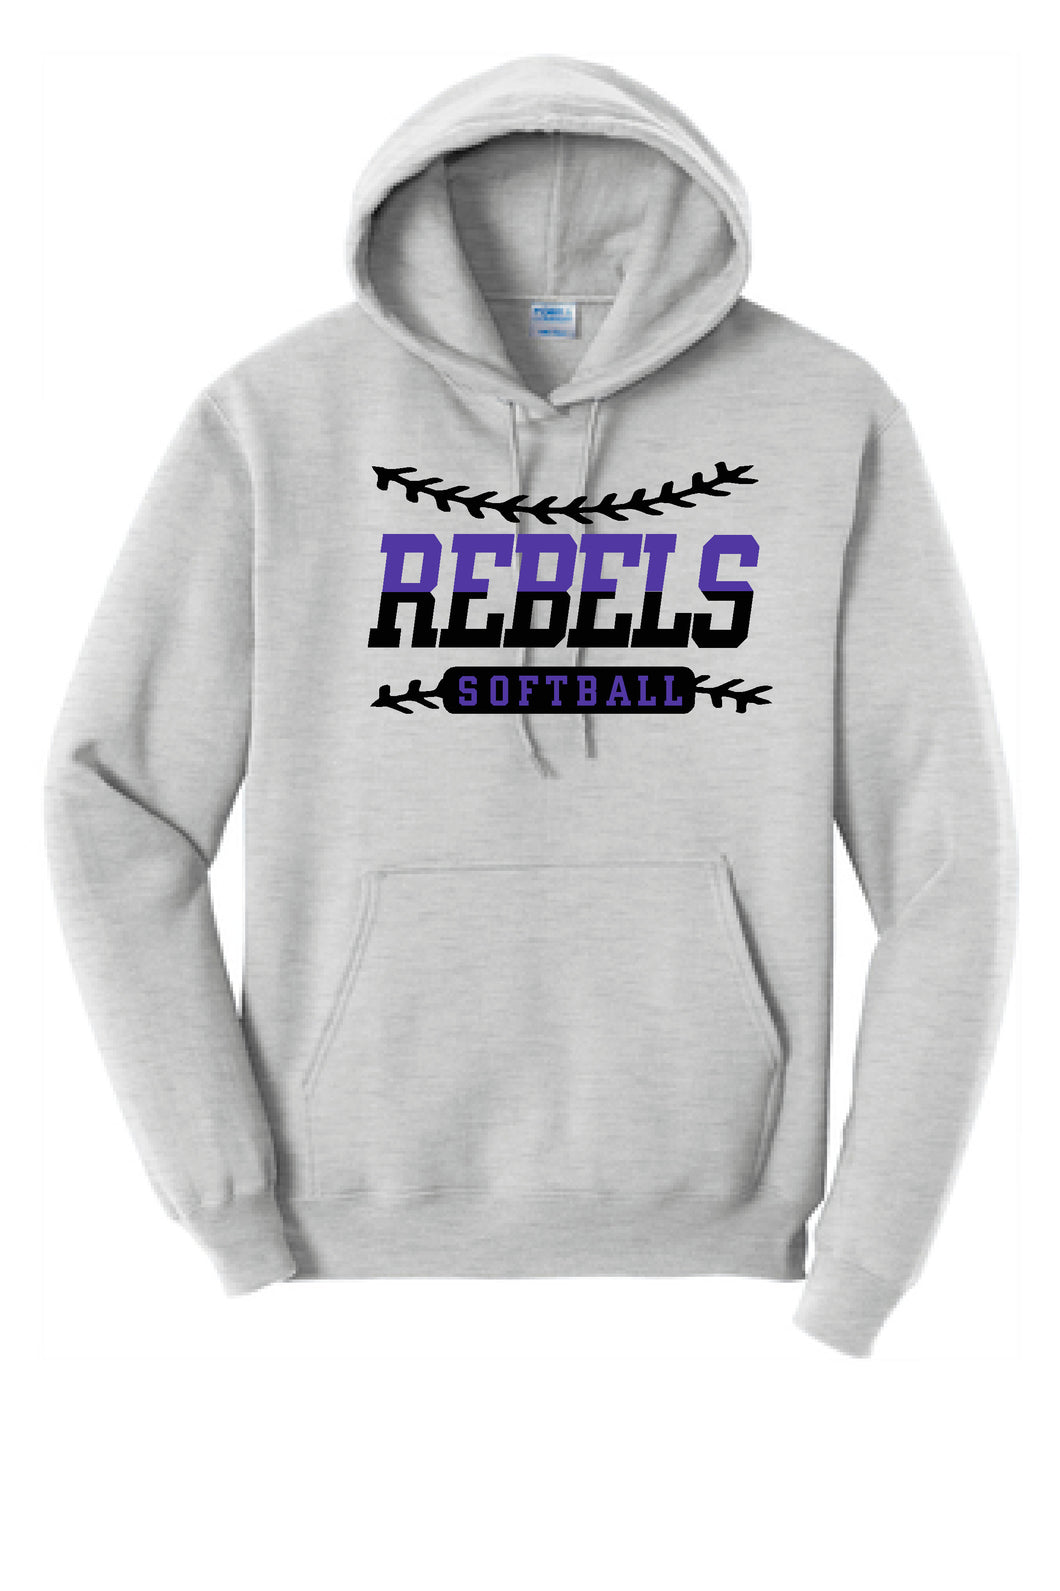 MCC Rebels Softball Port and Co. Hooded Sweatshirt  Design 2